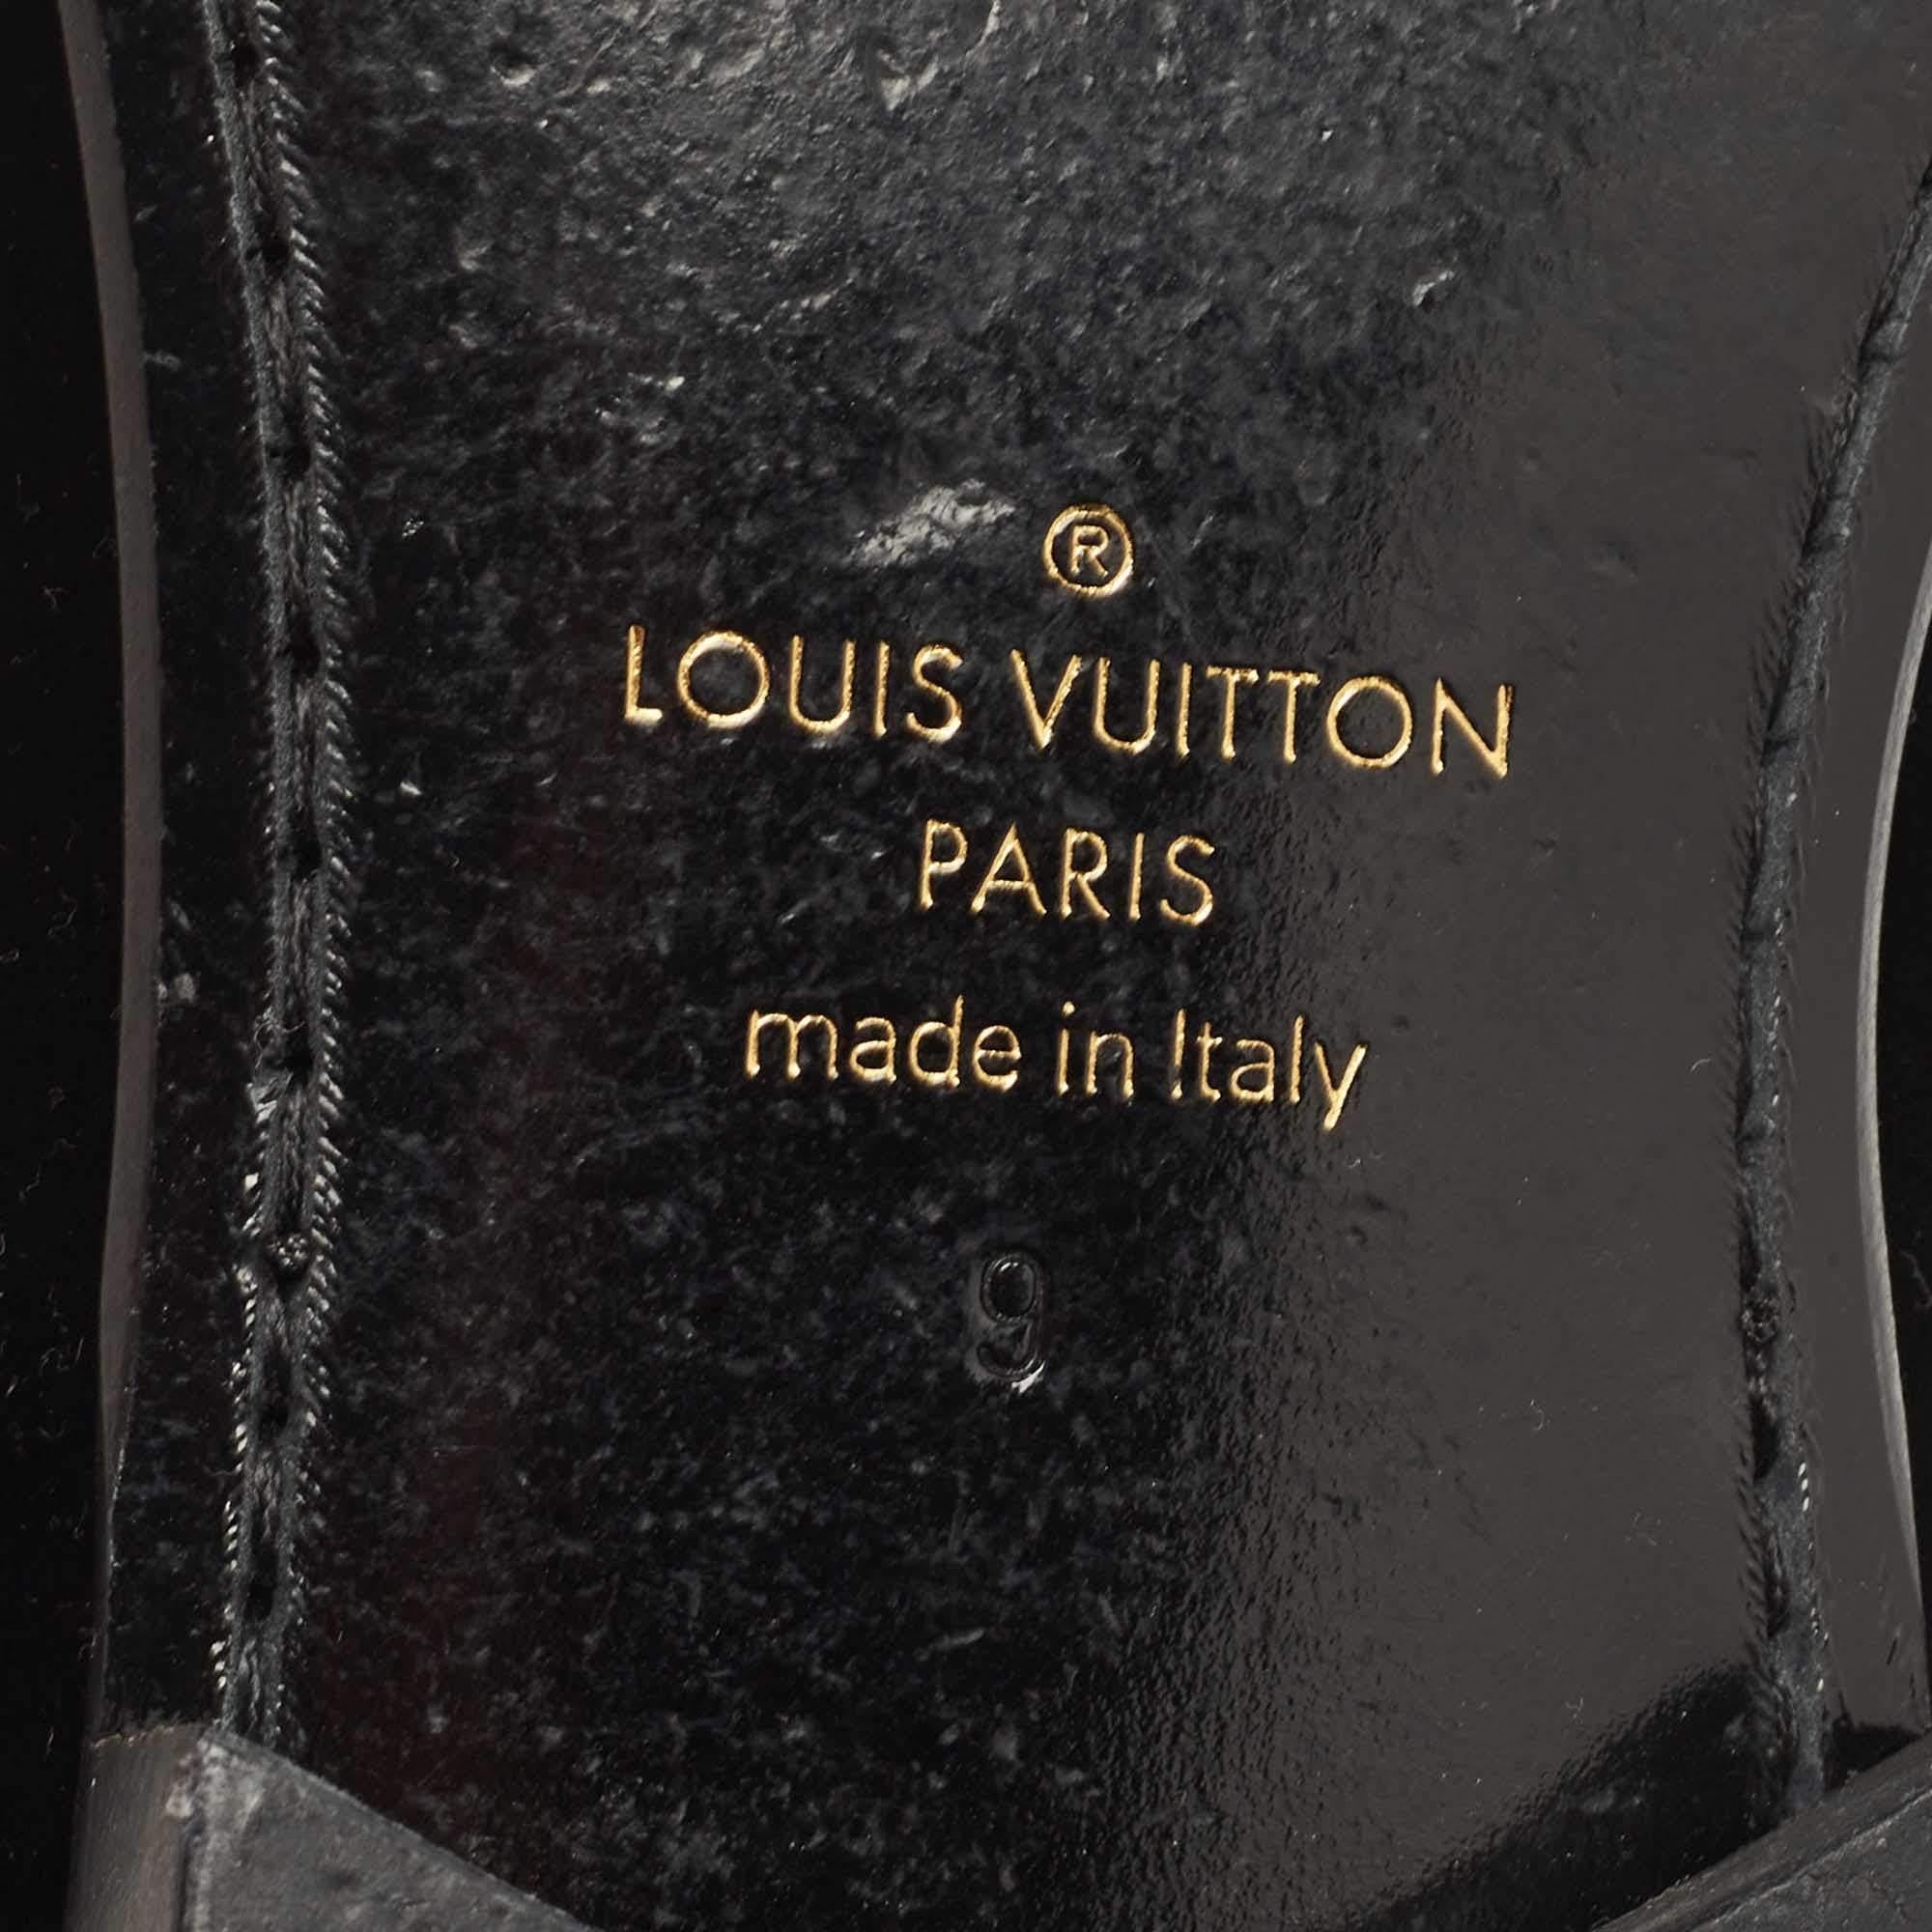 Louis Vuitton Black Velvet Auteuil Logo Smoking Slippers Size 43 For Sale 3